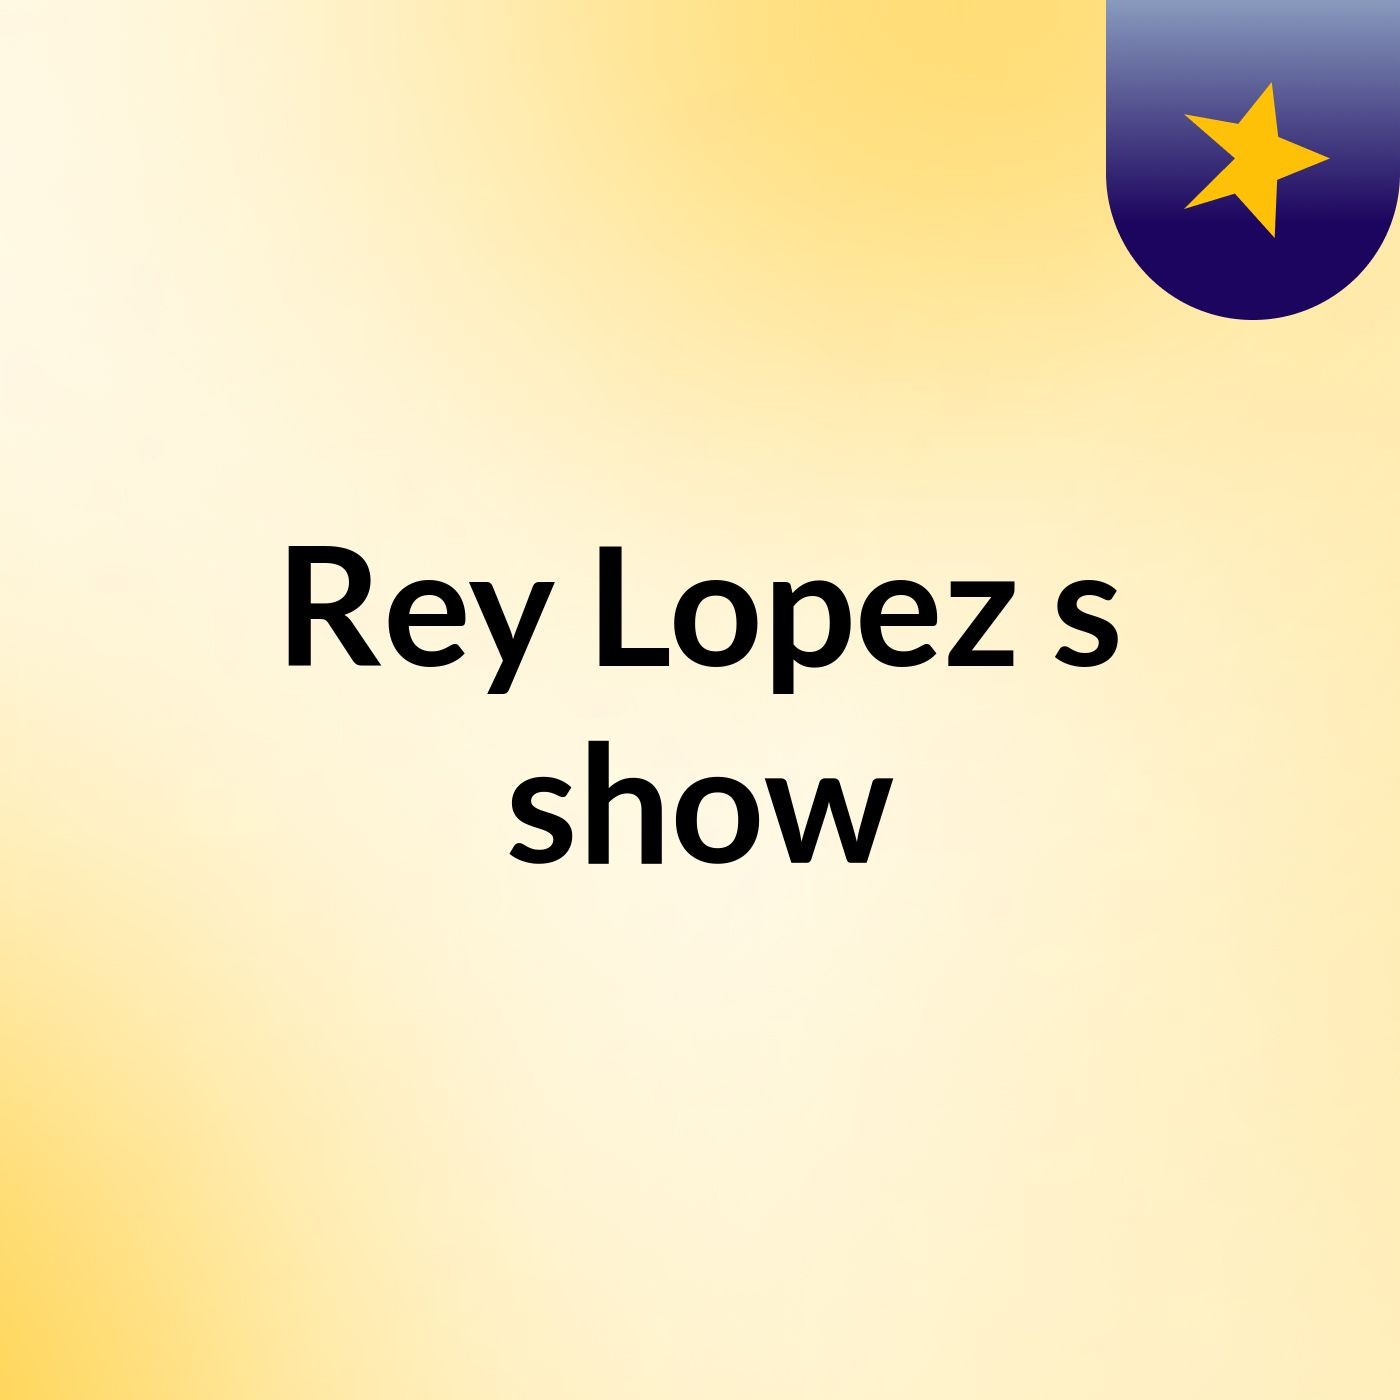 Rey Lopez's show